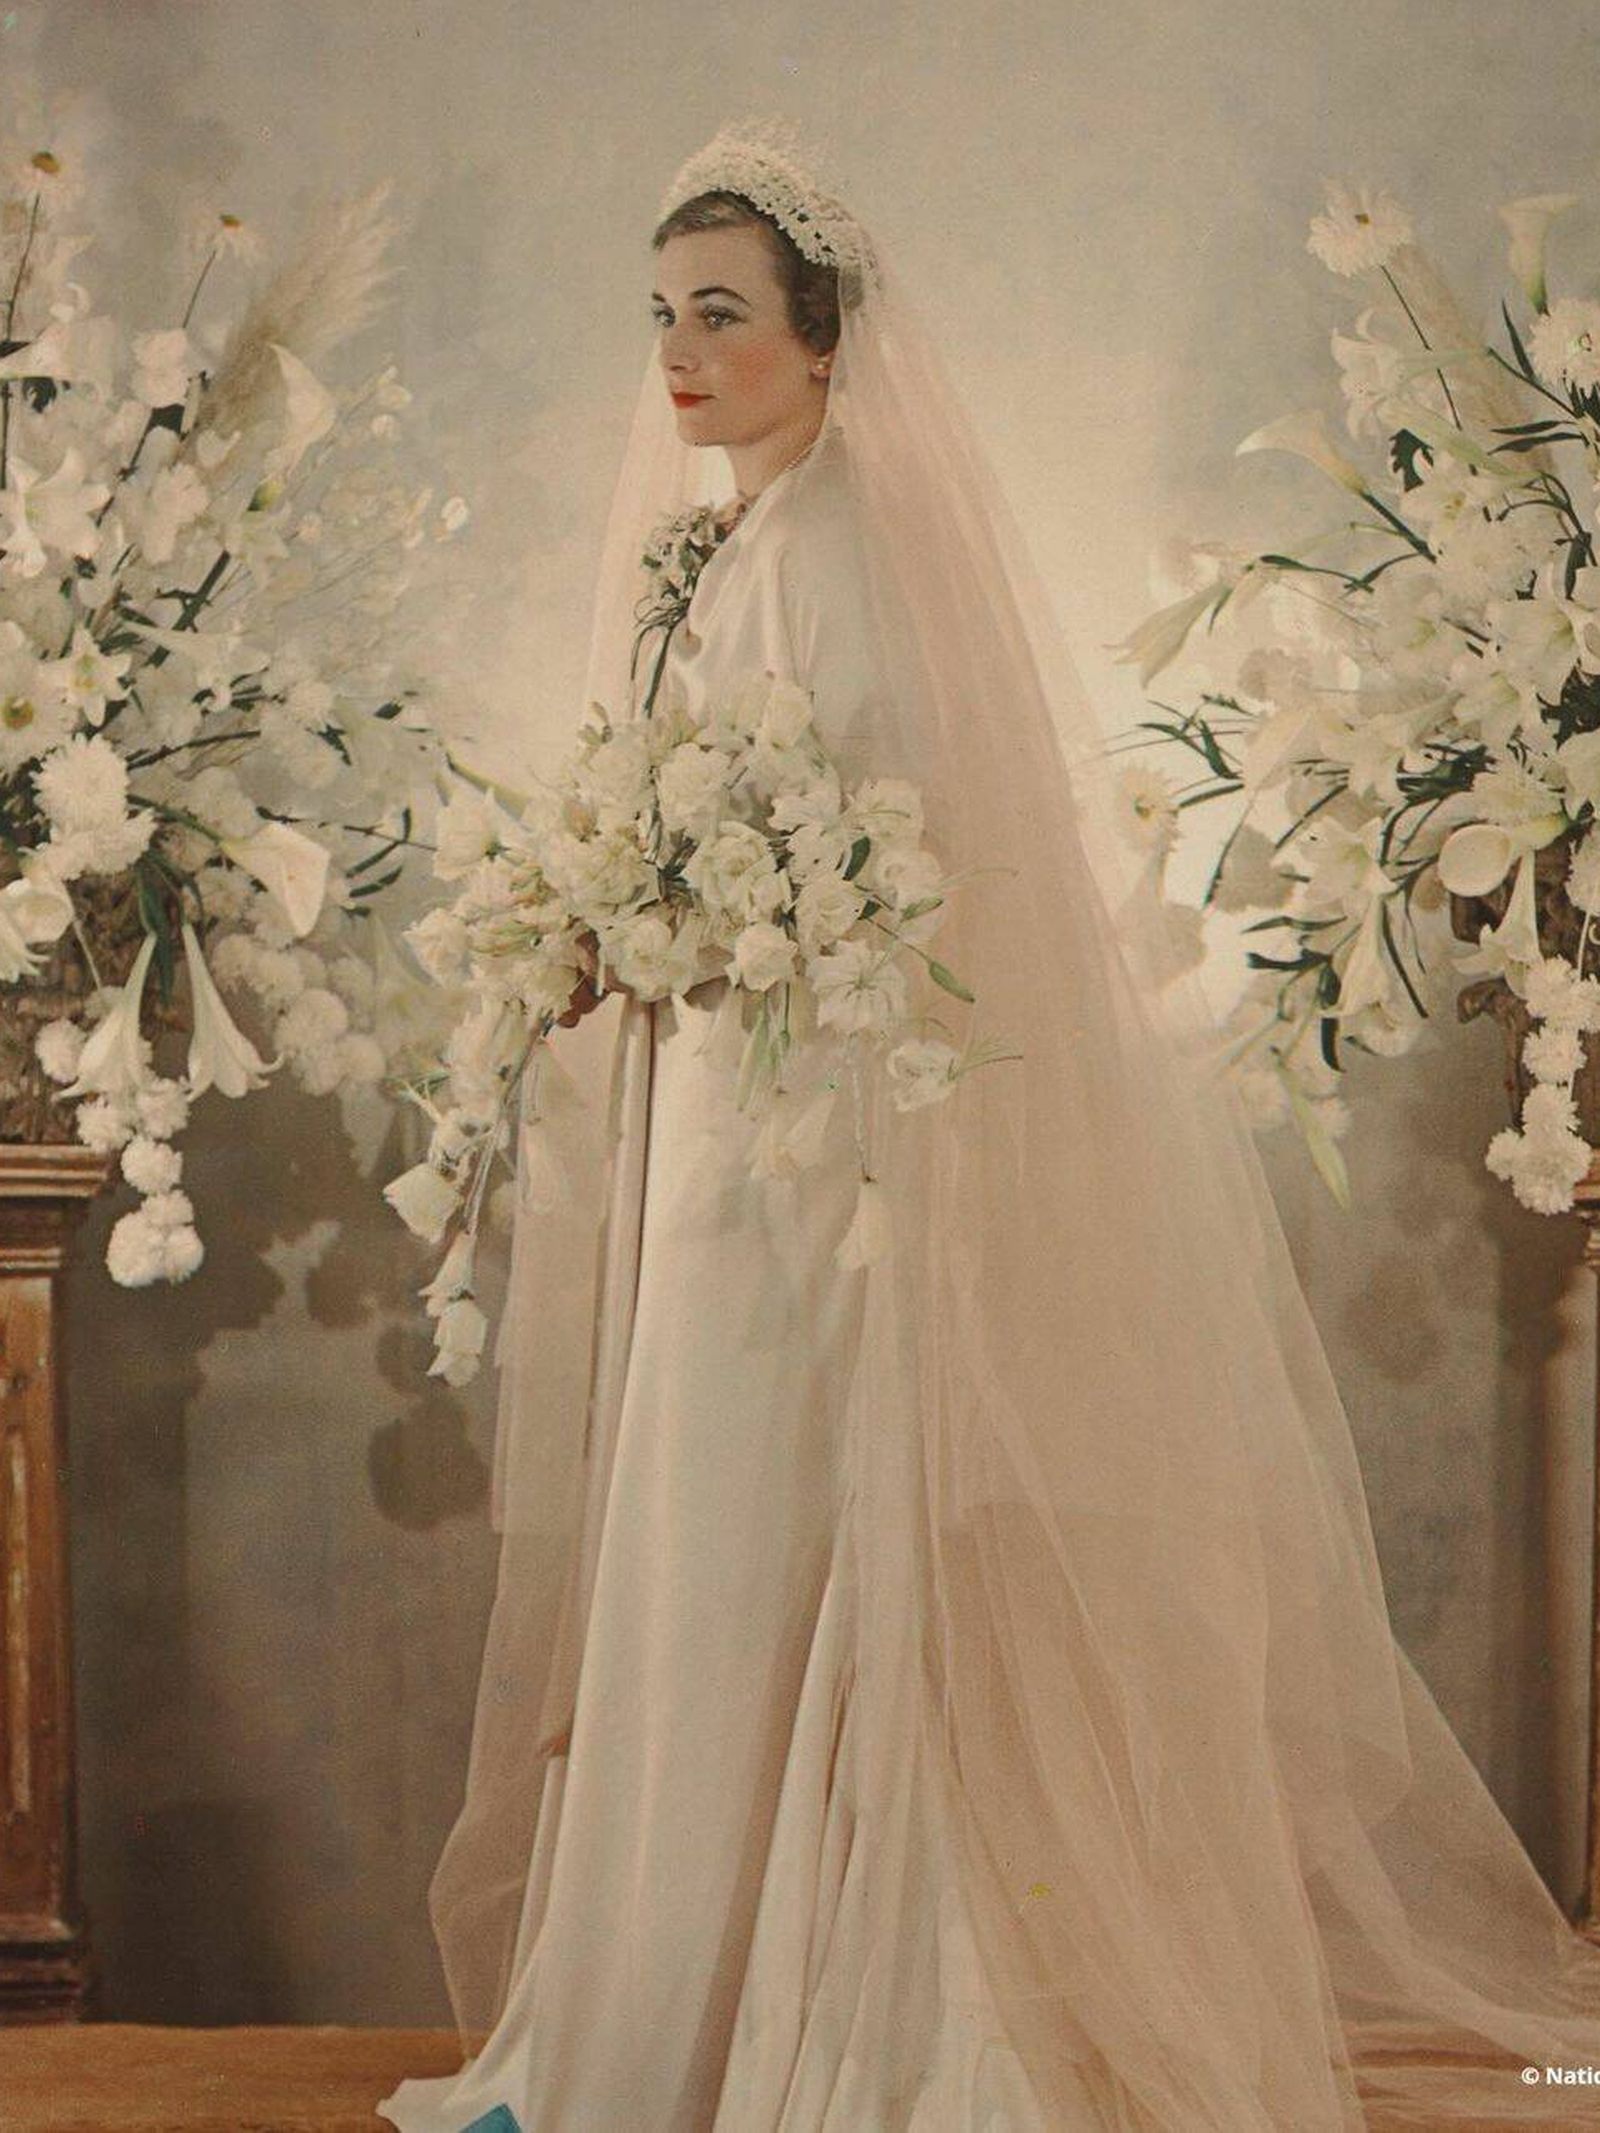 La princesa Alice durante su boda fotografiada por Cecil Beaton. (Instagram/@royalcollectiontrust)